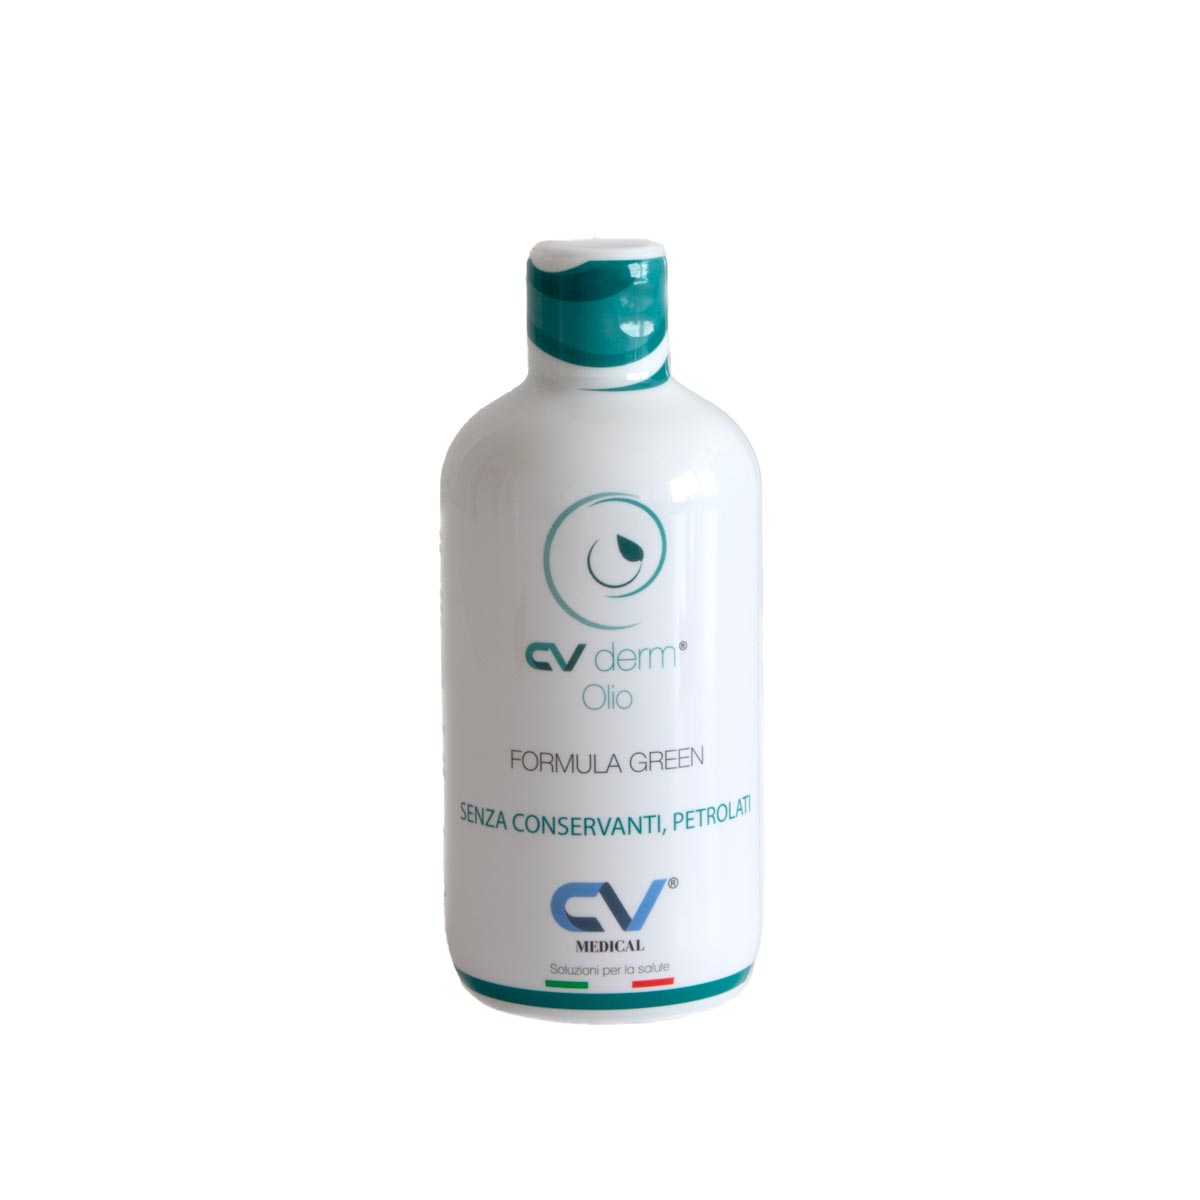 Image of CV Derm(R) Olio Detergente CV Medical(R) 500ml